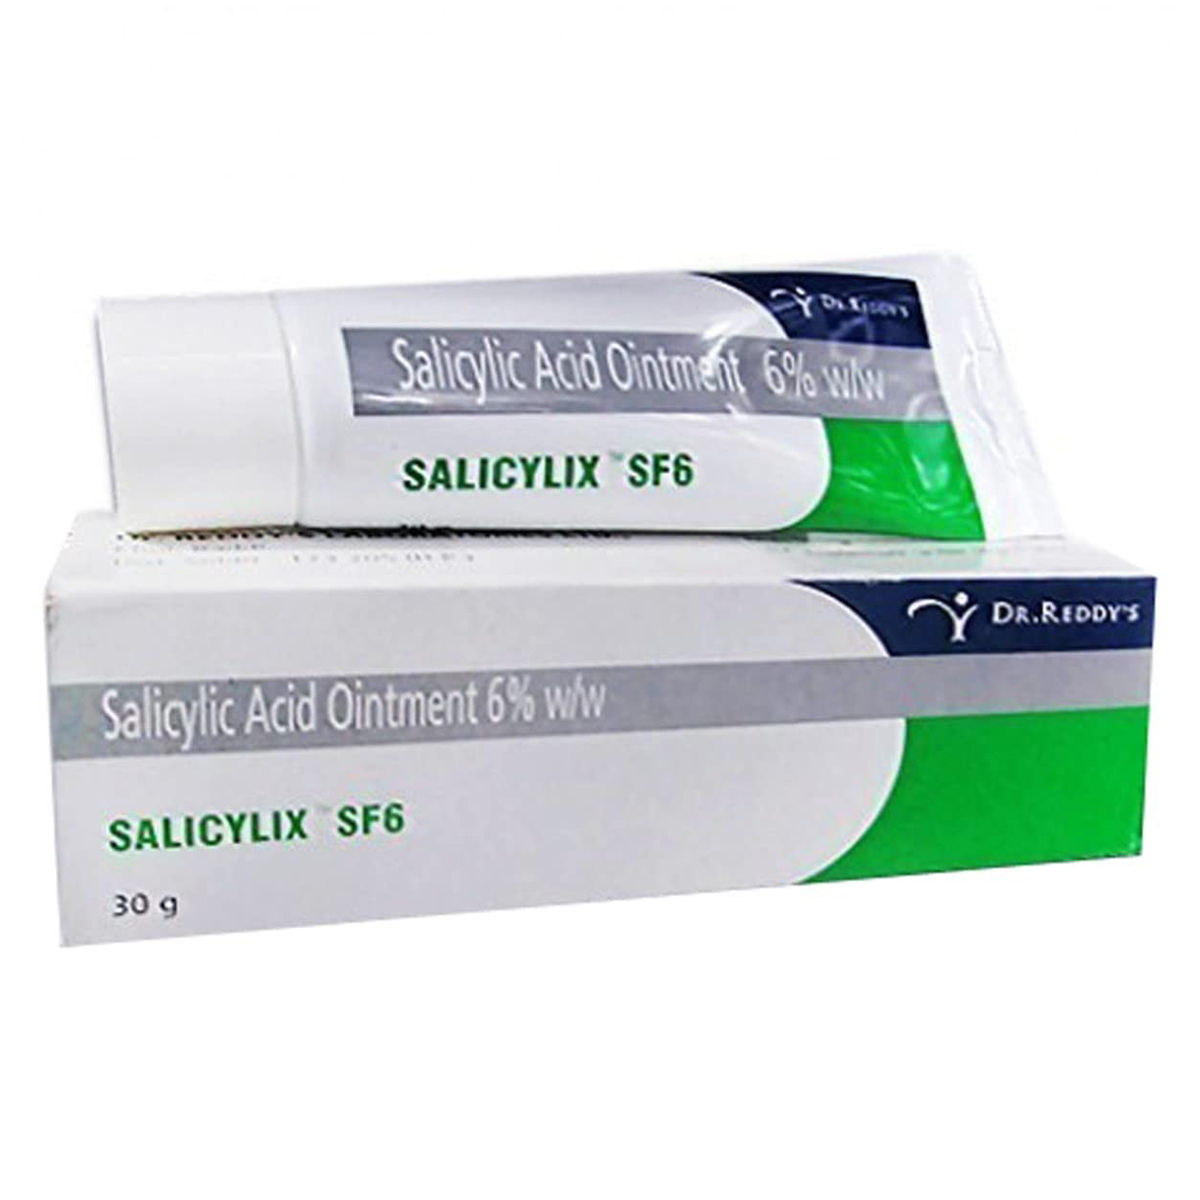 Buy Salicylix SF6 Ointment 30 gm Online